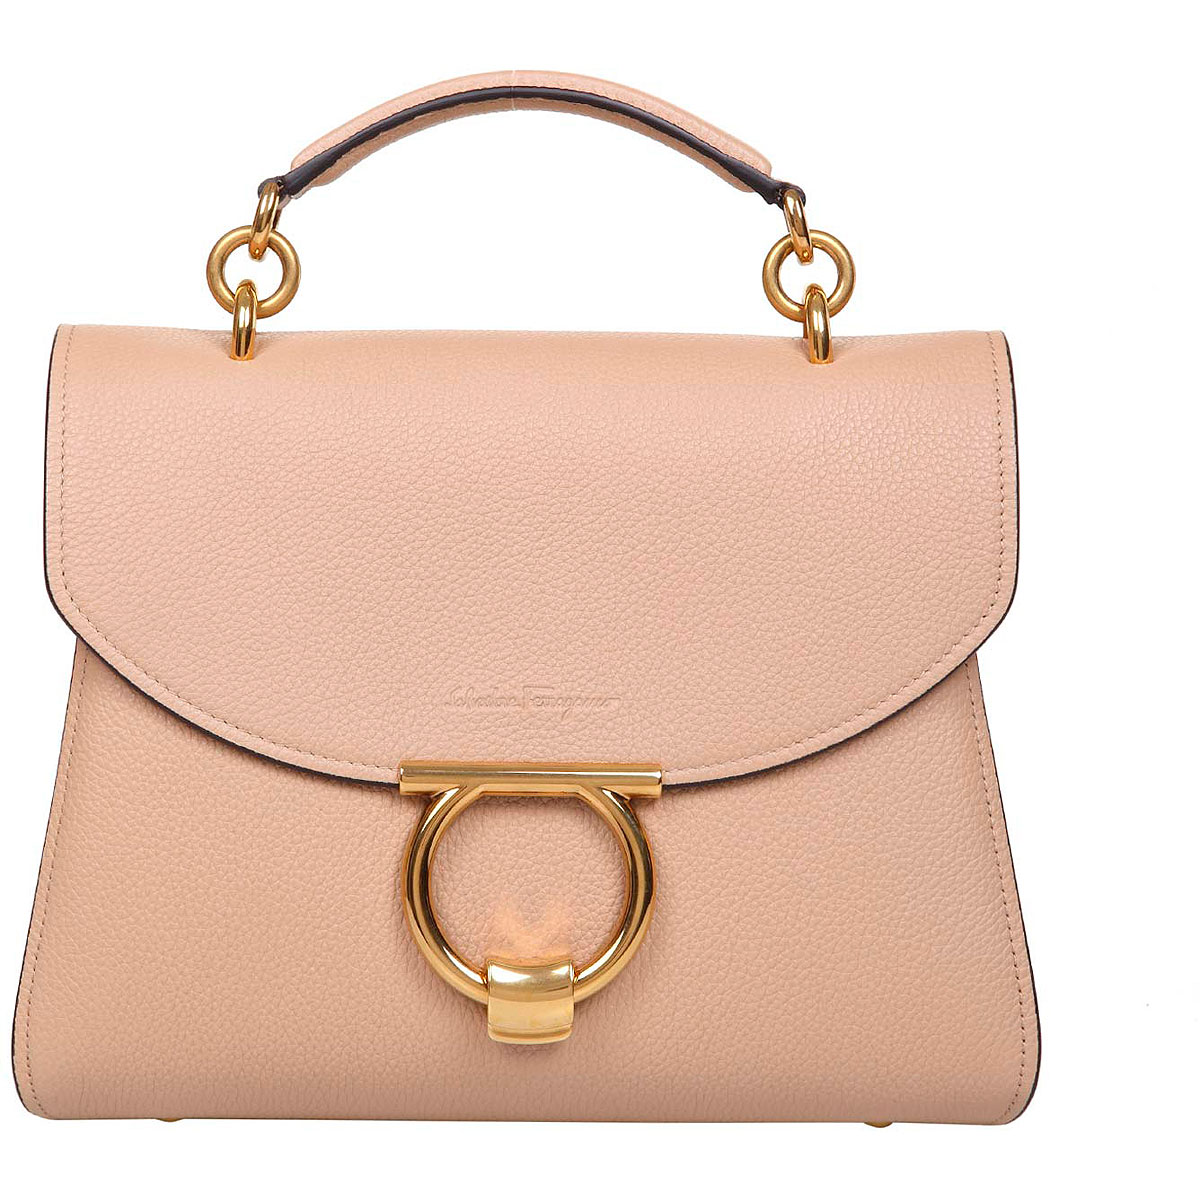 Handbags Salvatore Ferragamo, Style code: 720506-21h493-